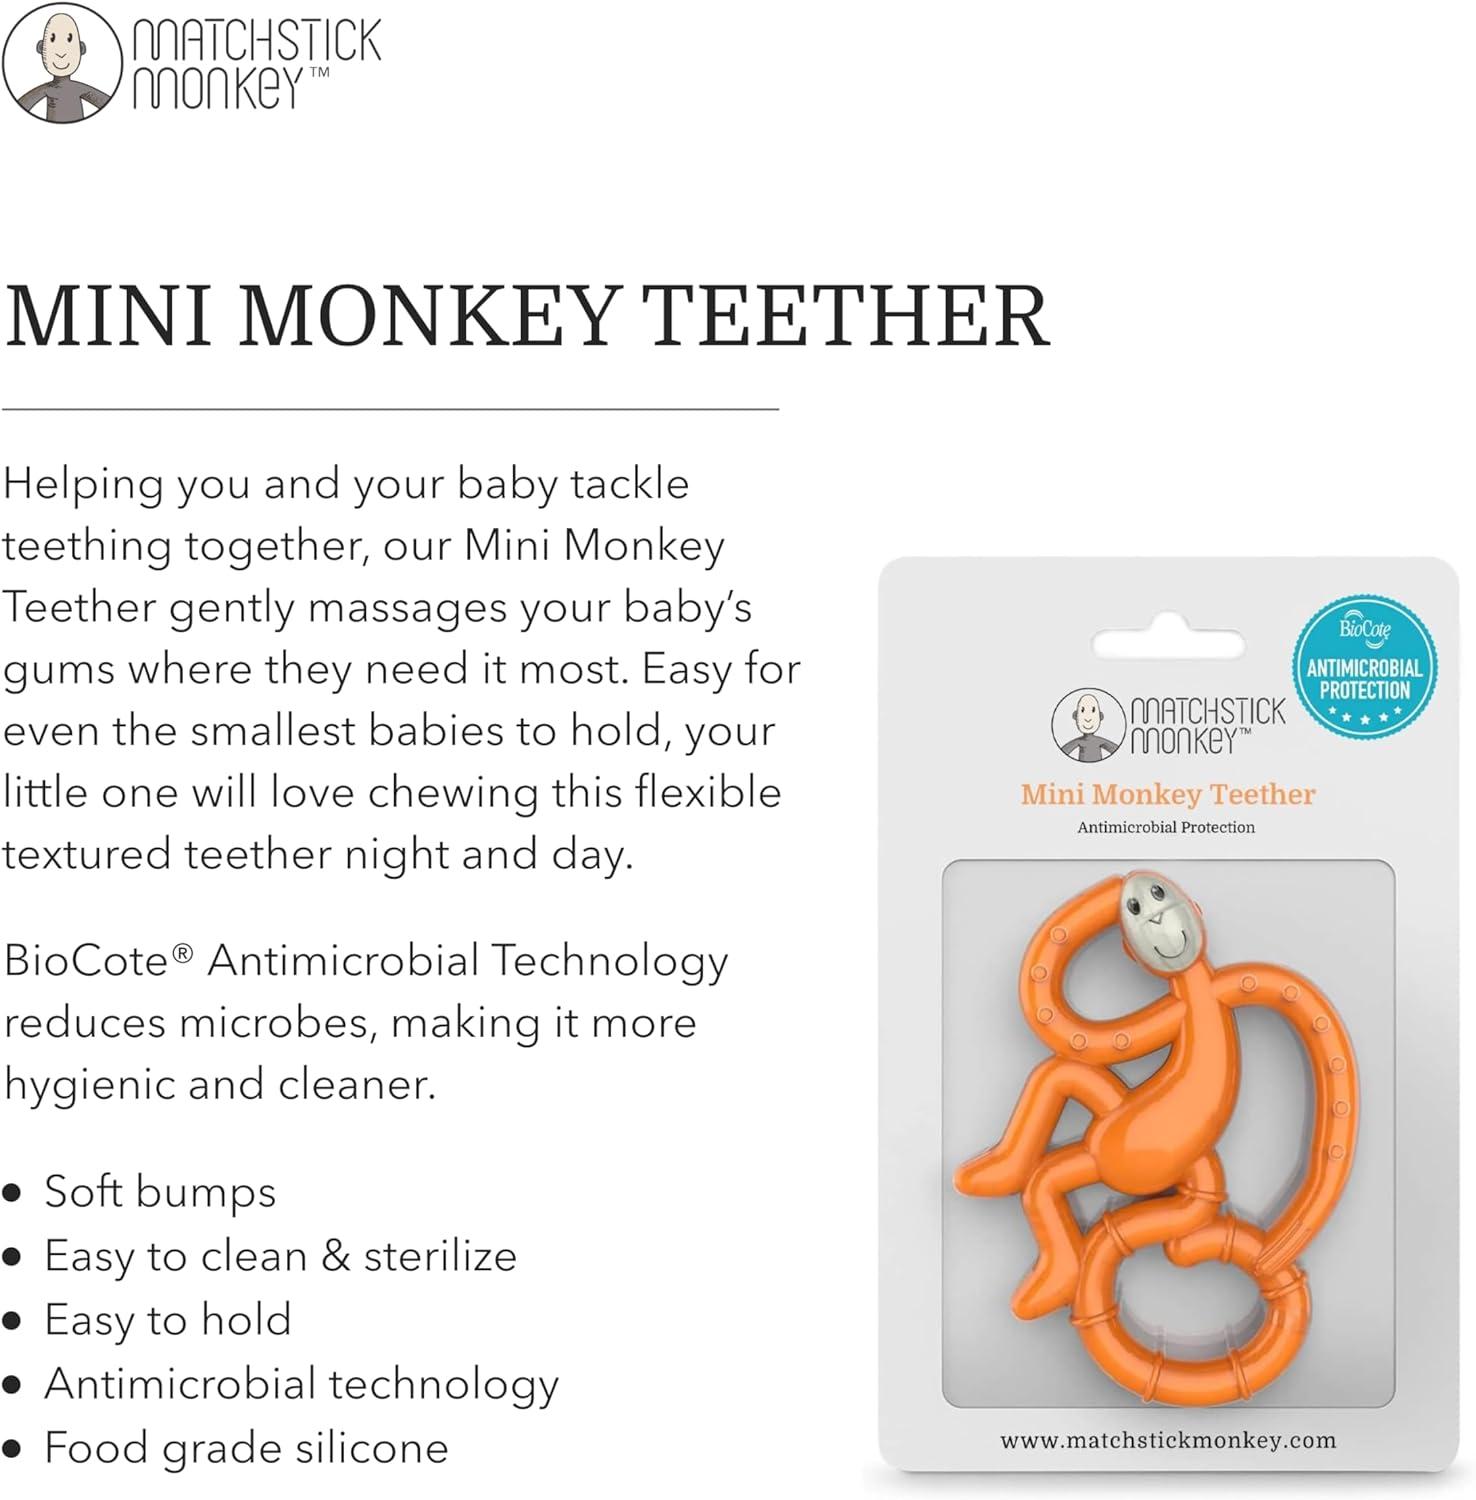 Matchstick Monkey Mini Monkey Teether review